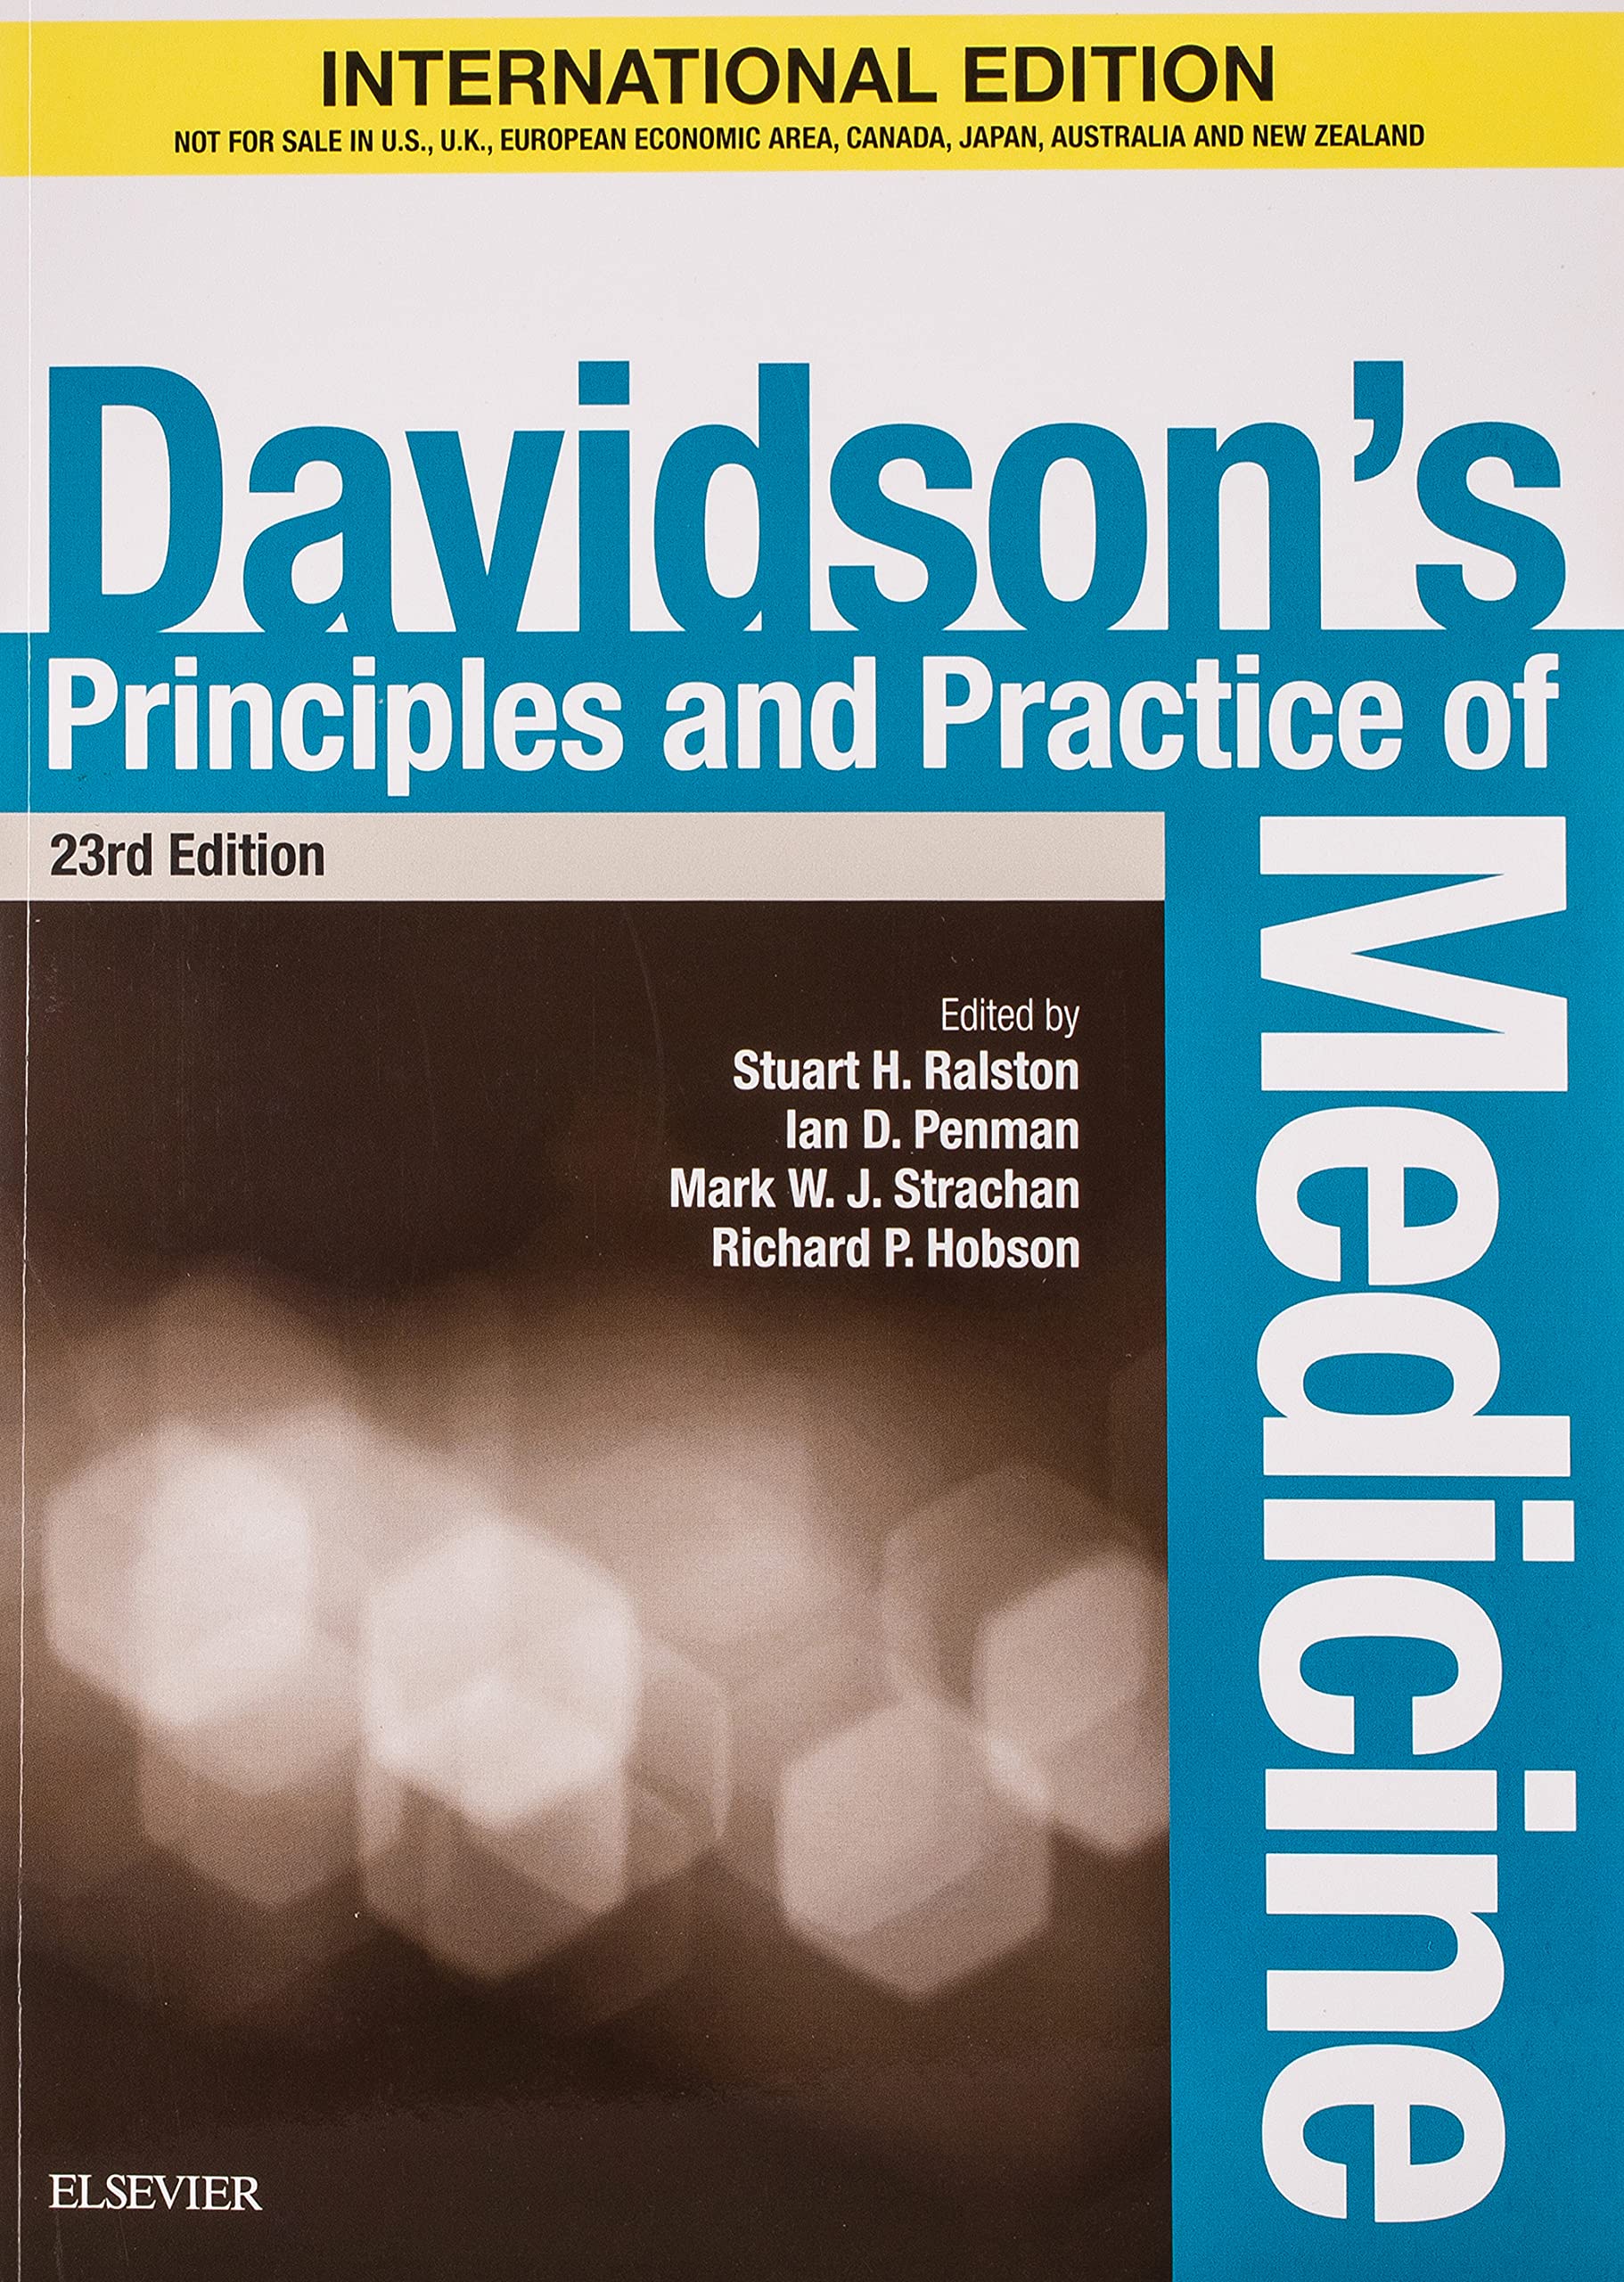 [PDF] Download Principle And Practice Of Medicine by Davidson Book pdf